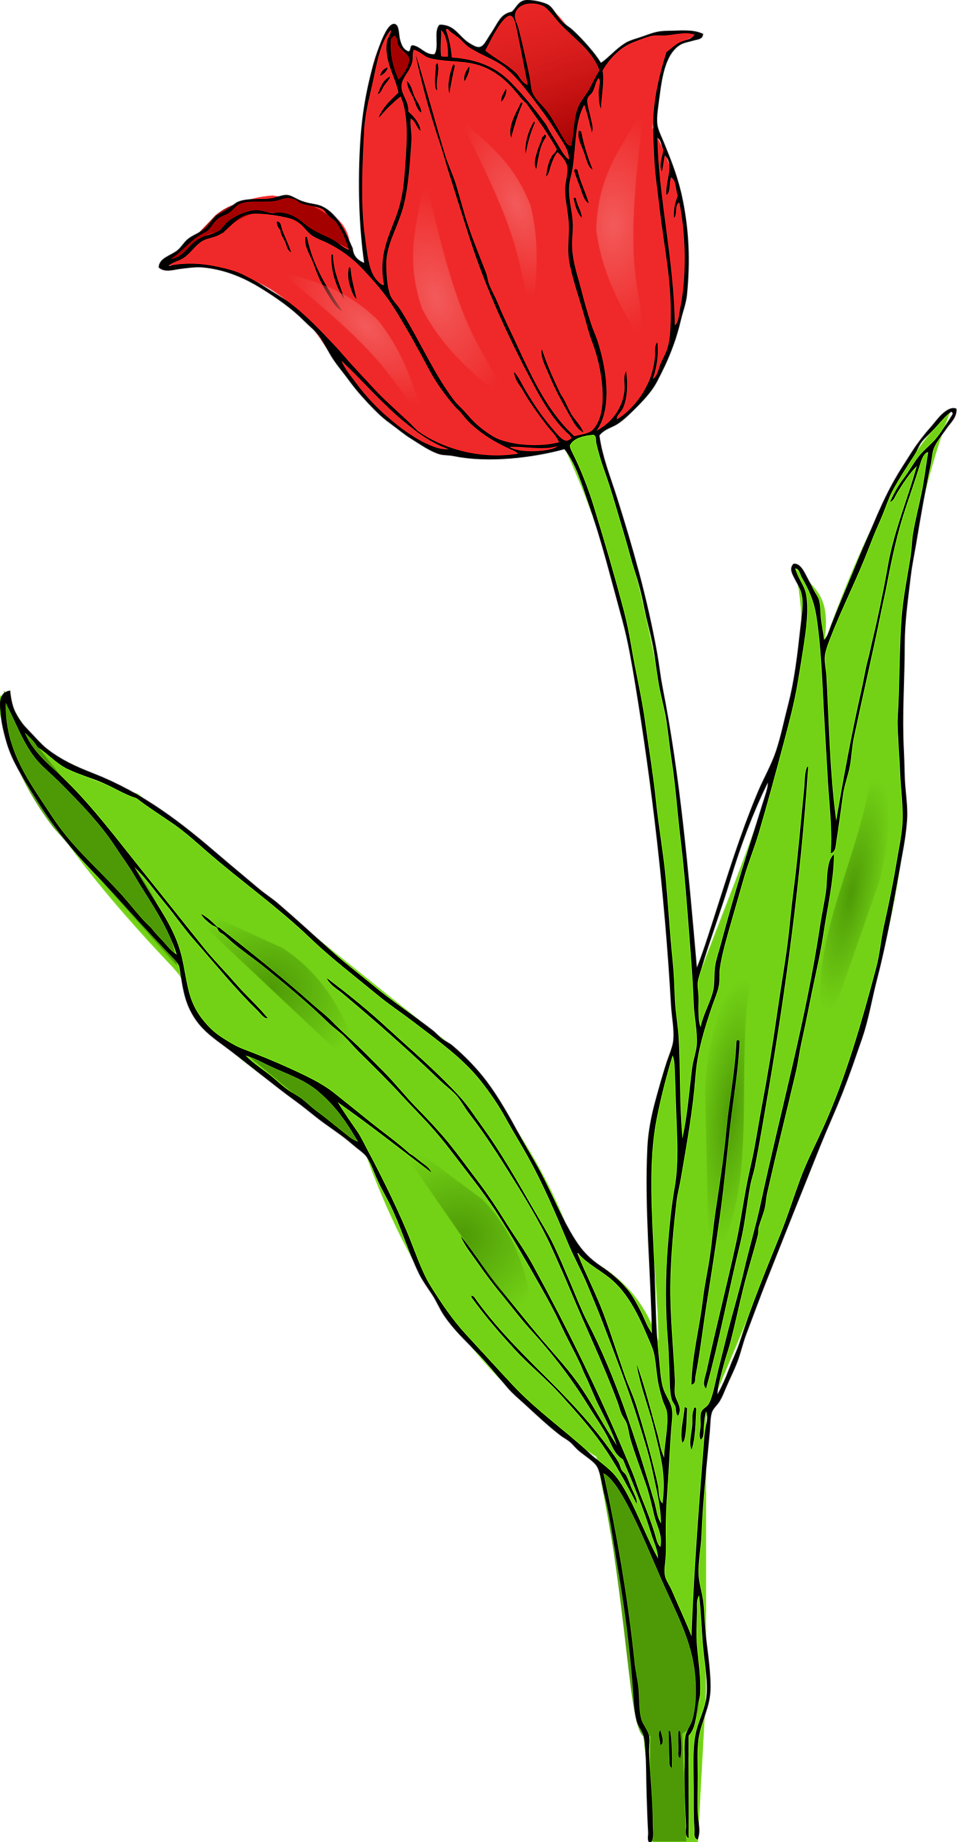 Clipart border tulip. Free stock photo illustration